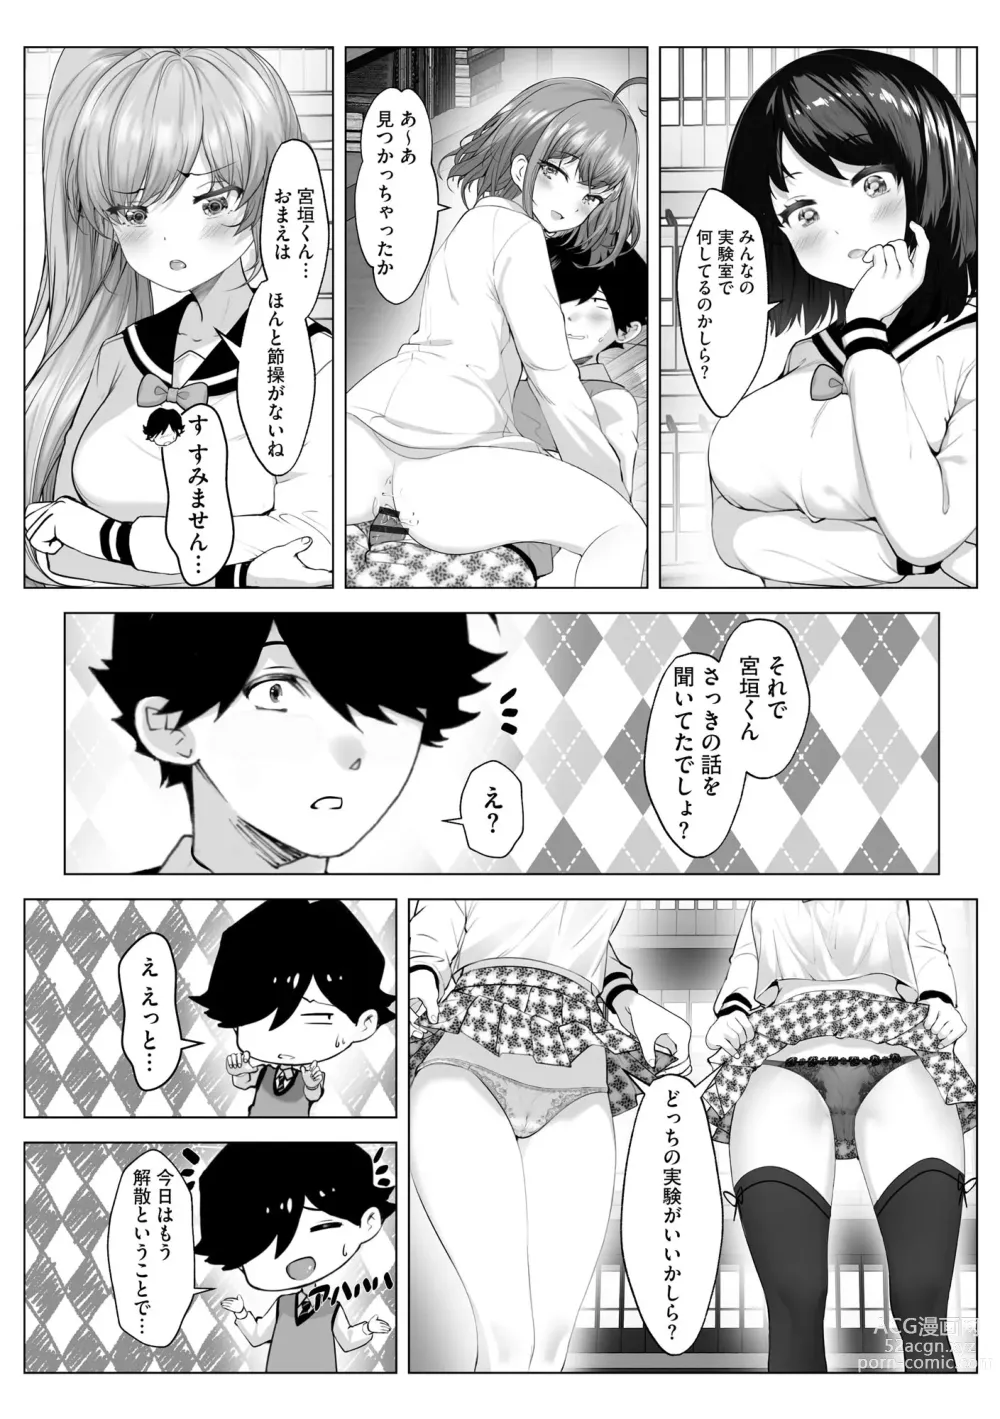 Page 372 of manga Cyberia Plus Vol. 15